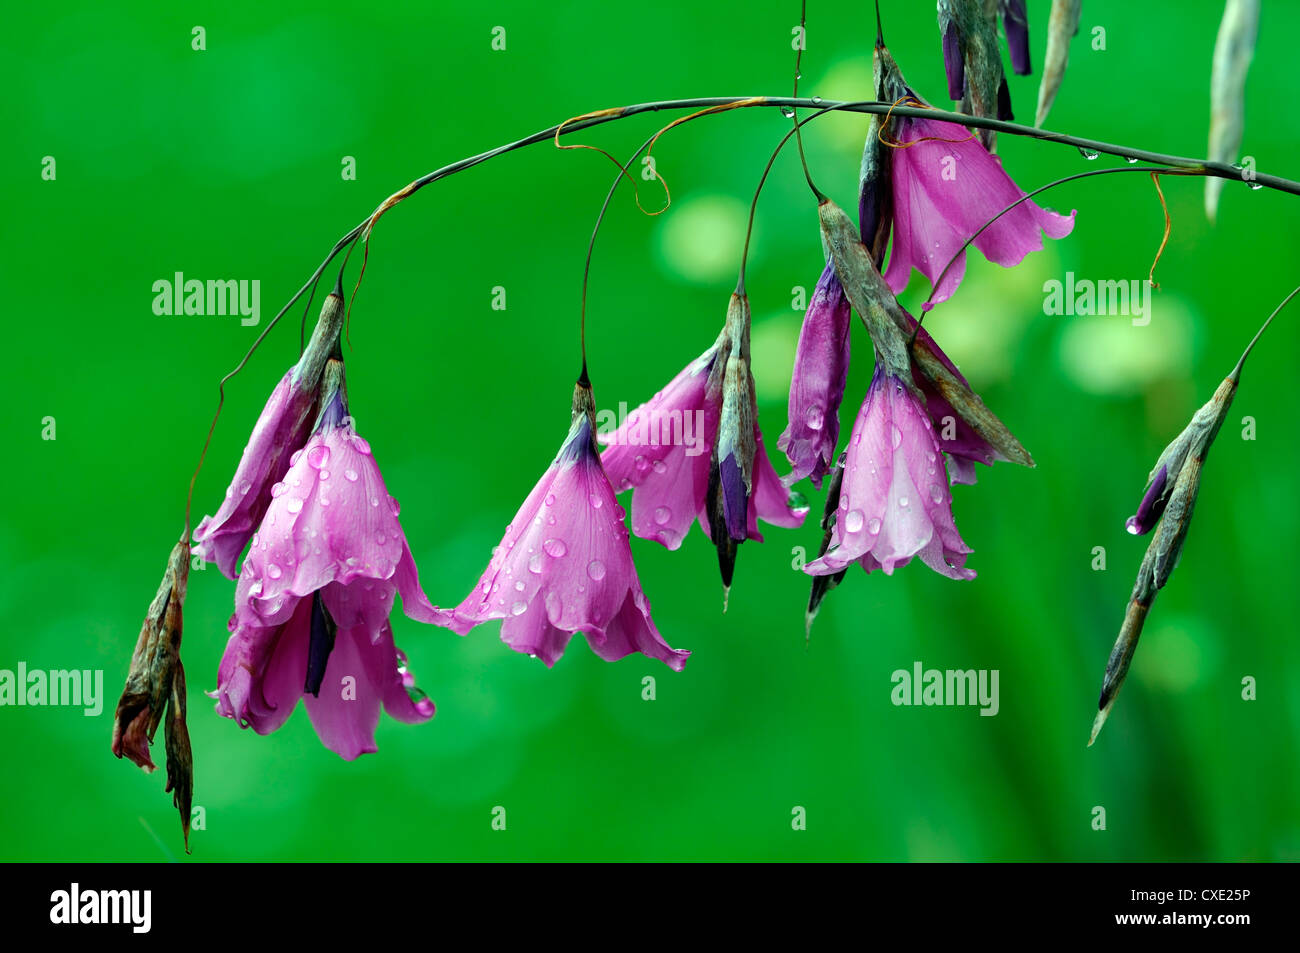 dierama pulcherrimum closeup pink purple petals flowers perennials arching dangling hanging bell shaped angels fishing rods Stock Photo